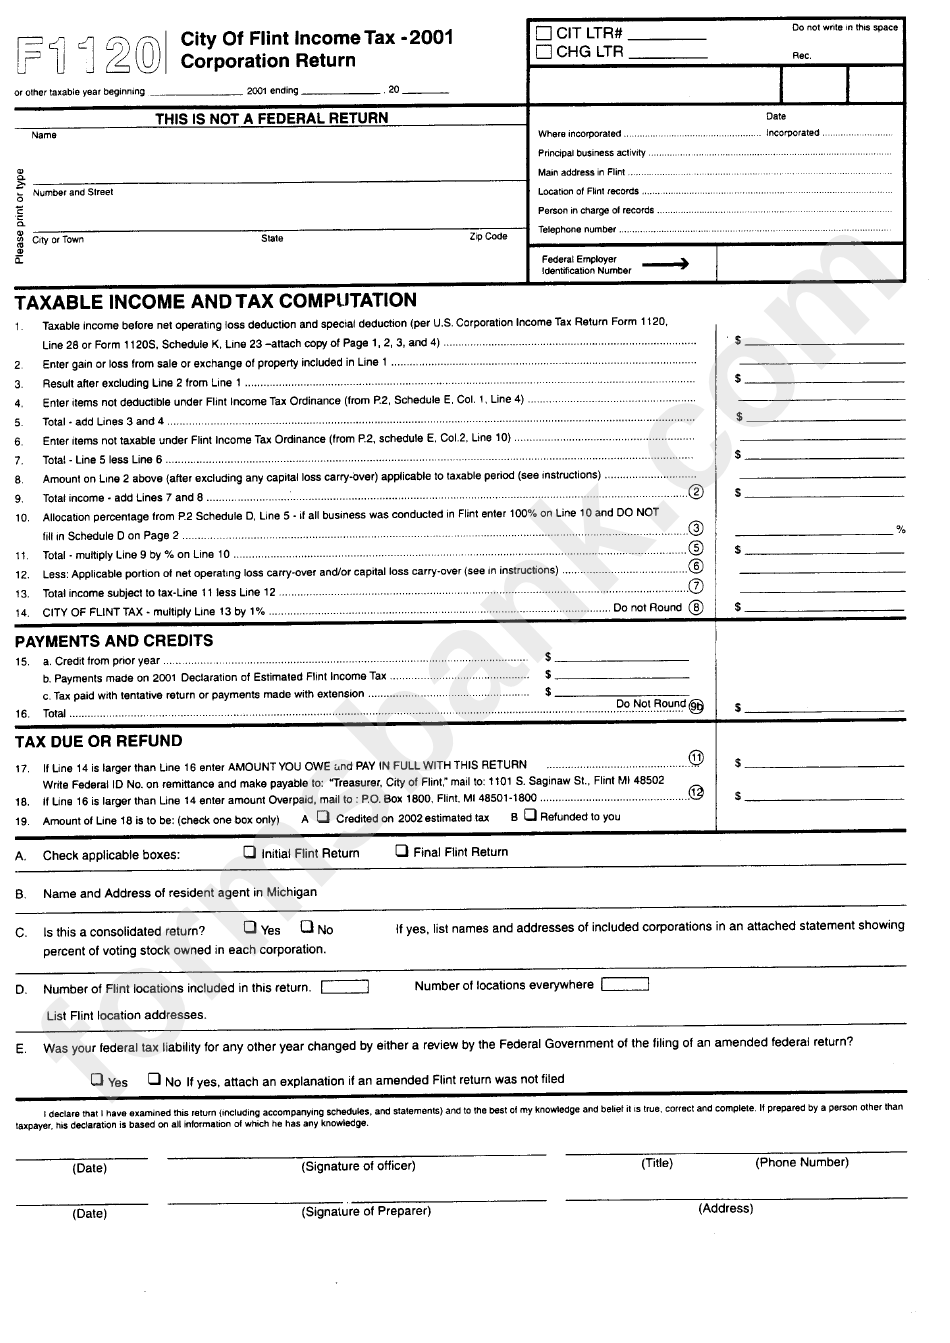 Form F1120 - City Of Flint Income Tax Corporation Return 2001